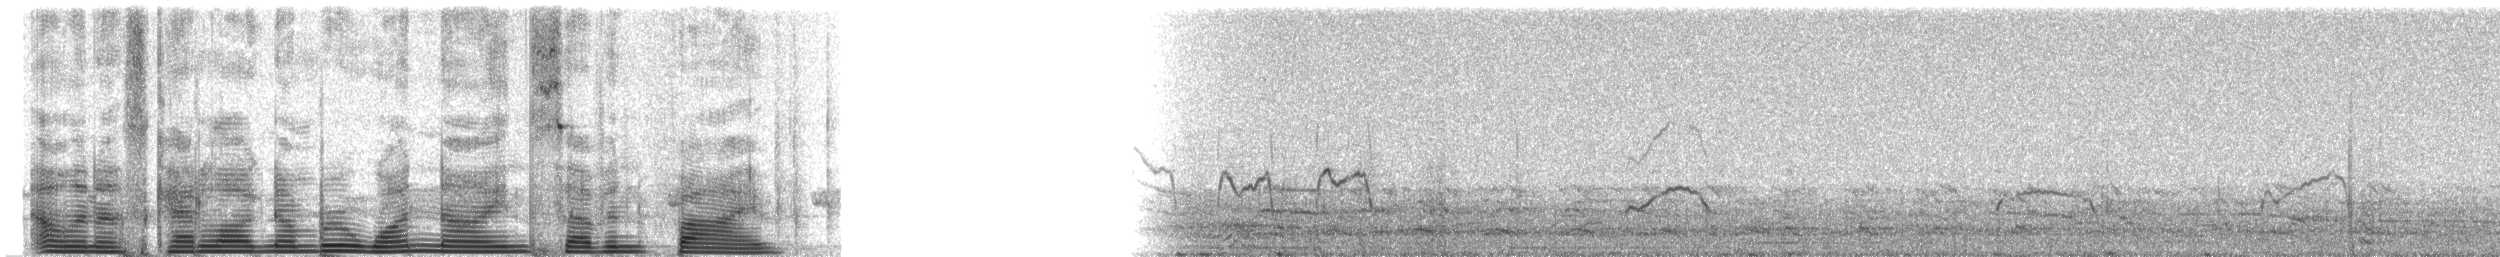 白腰叉尾海燕(leucorhoa) - ML1975